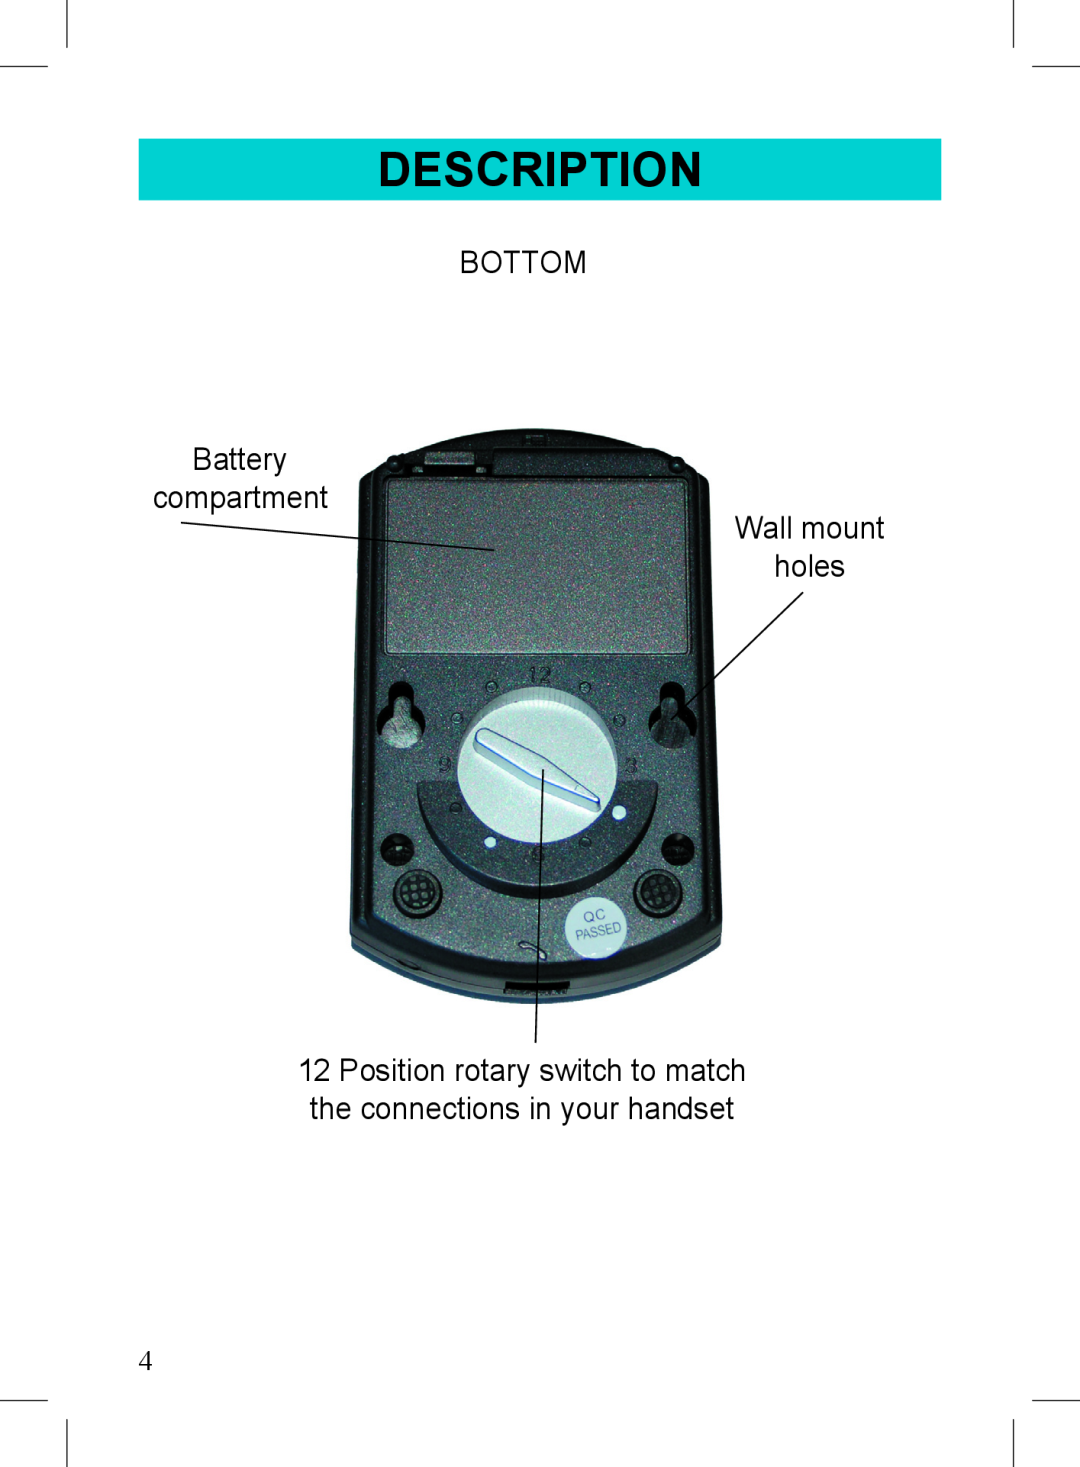 Geemarc P-AMP40 manual BOTTOM Battery compartment Wall mount holes, Description 